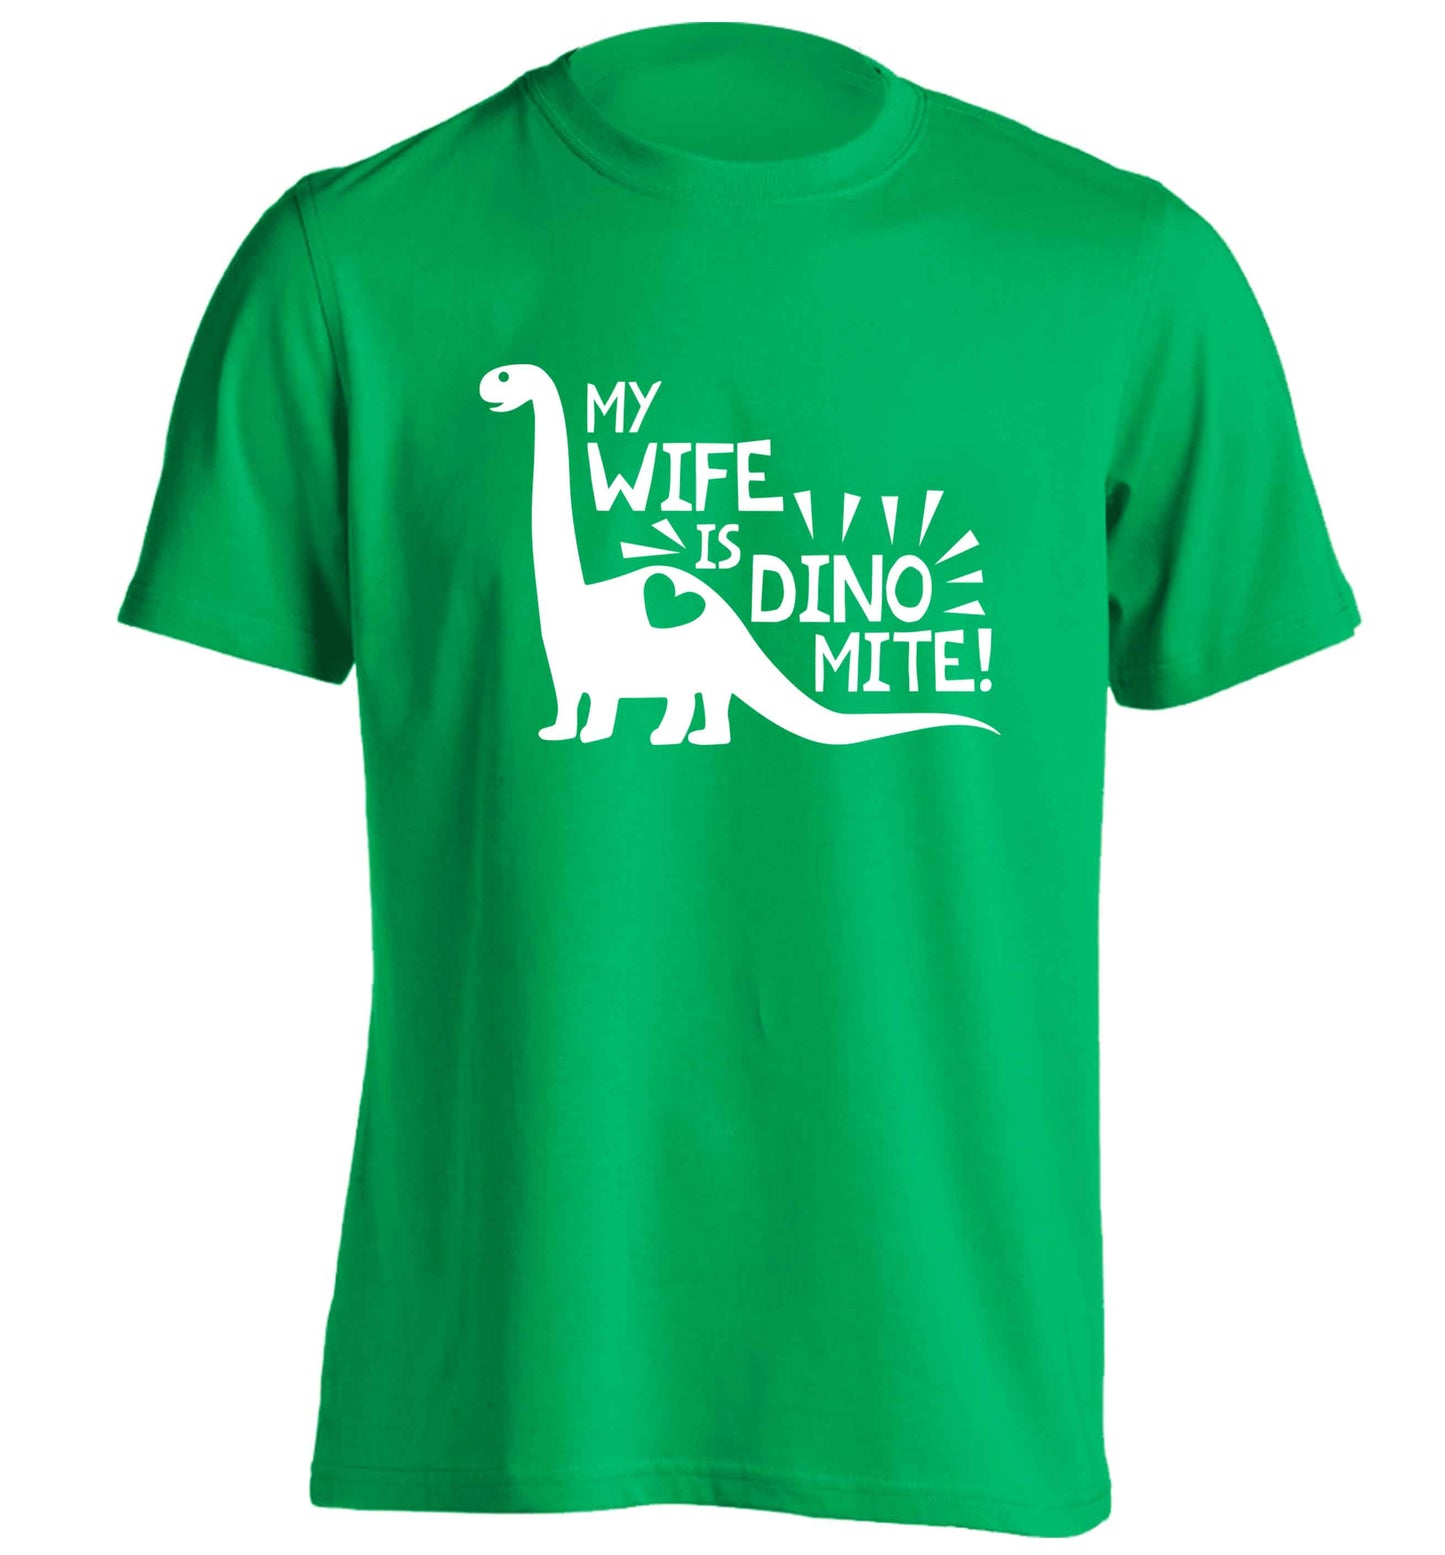 My wife is dinomite! adults unisex green Tshirt 2XL